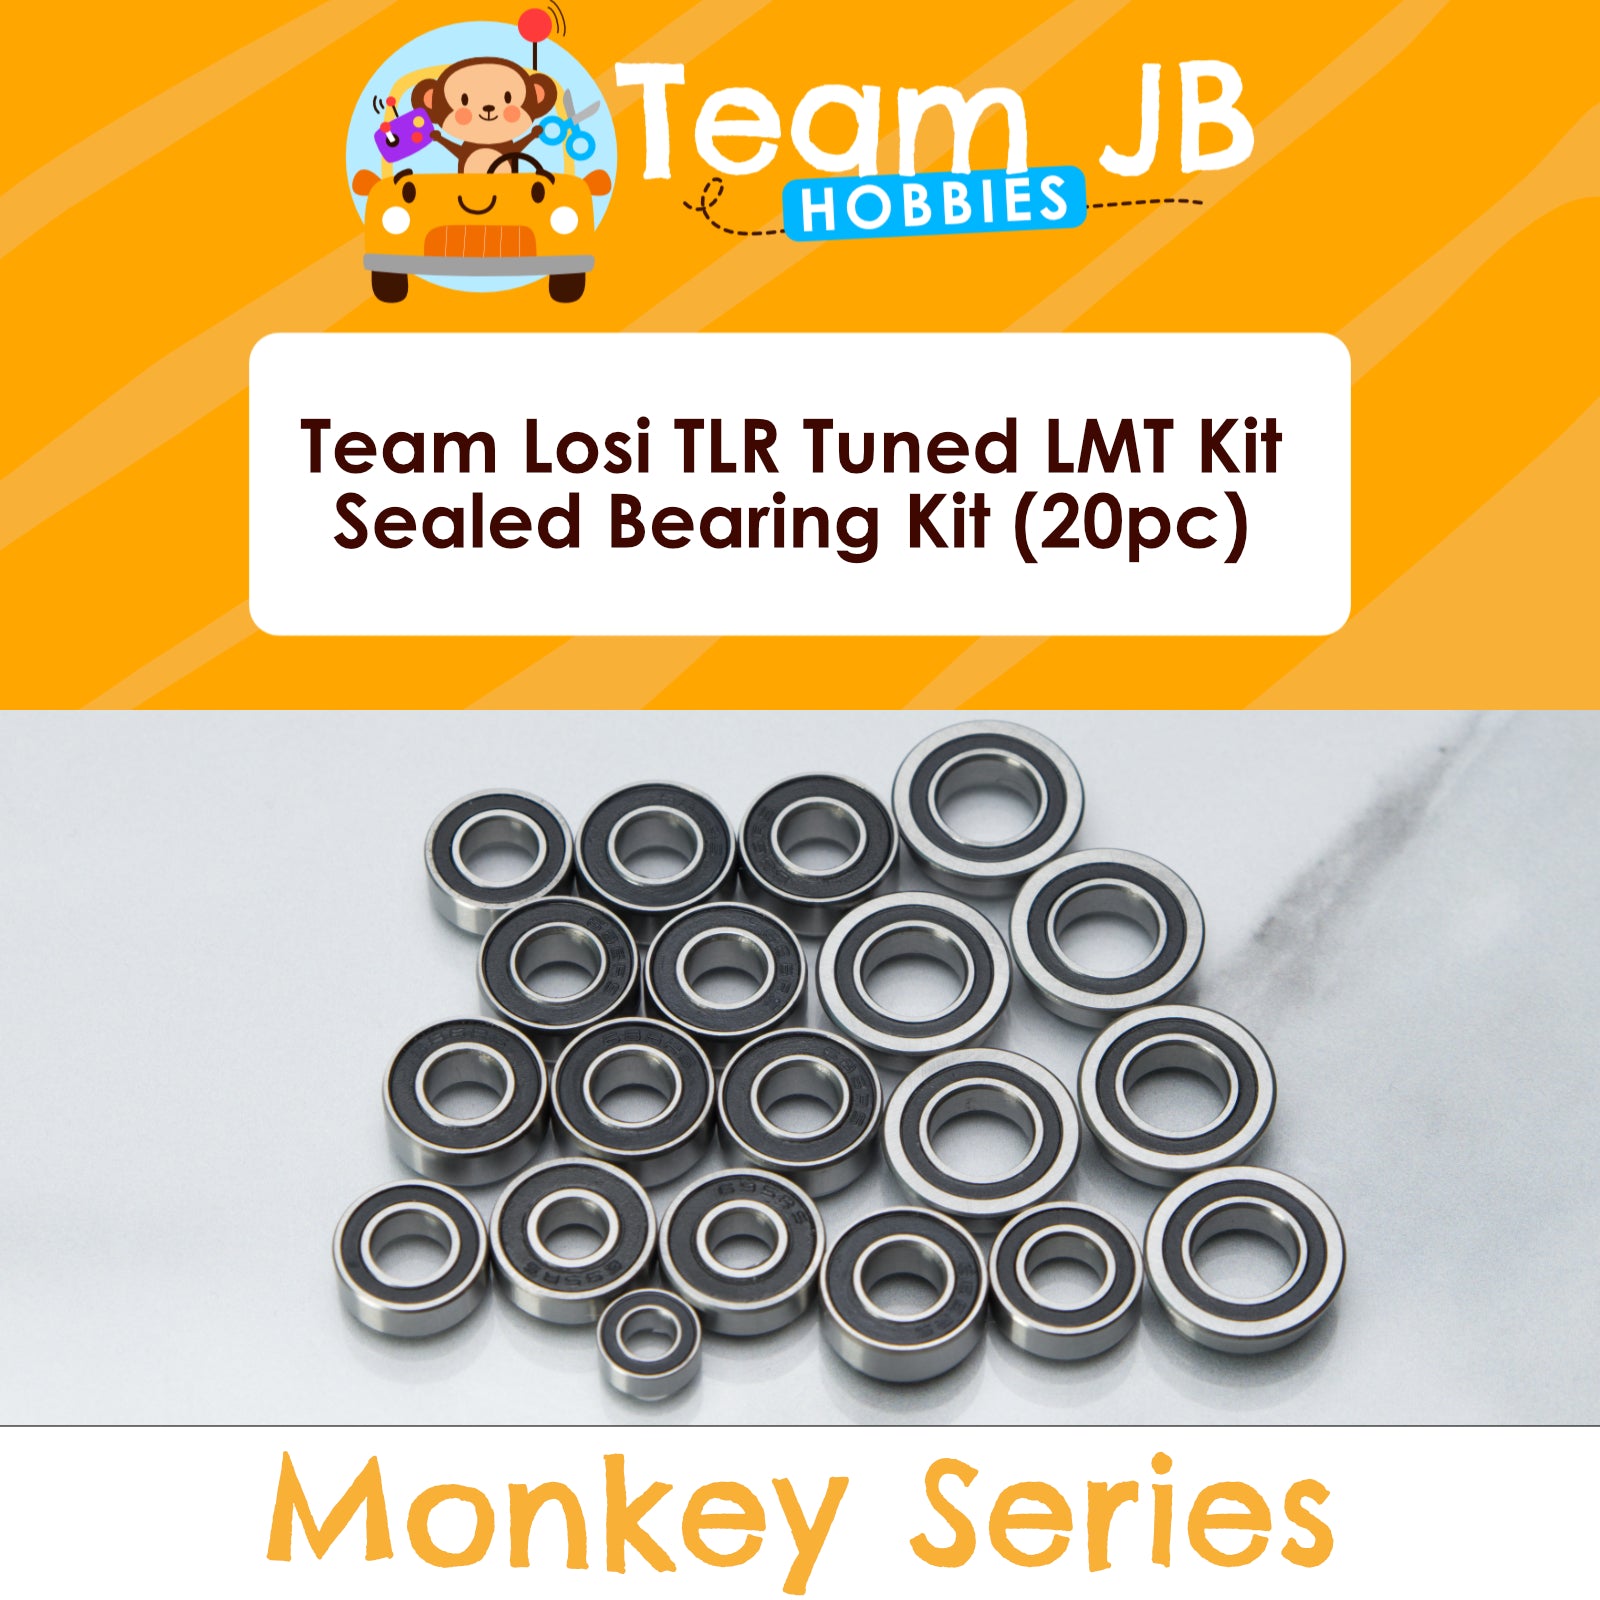 Team Losi TLR Tuned LMT Kit - Sealed Bearing Kit